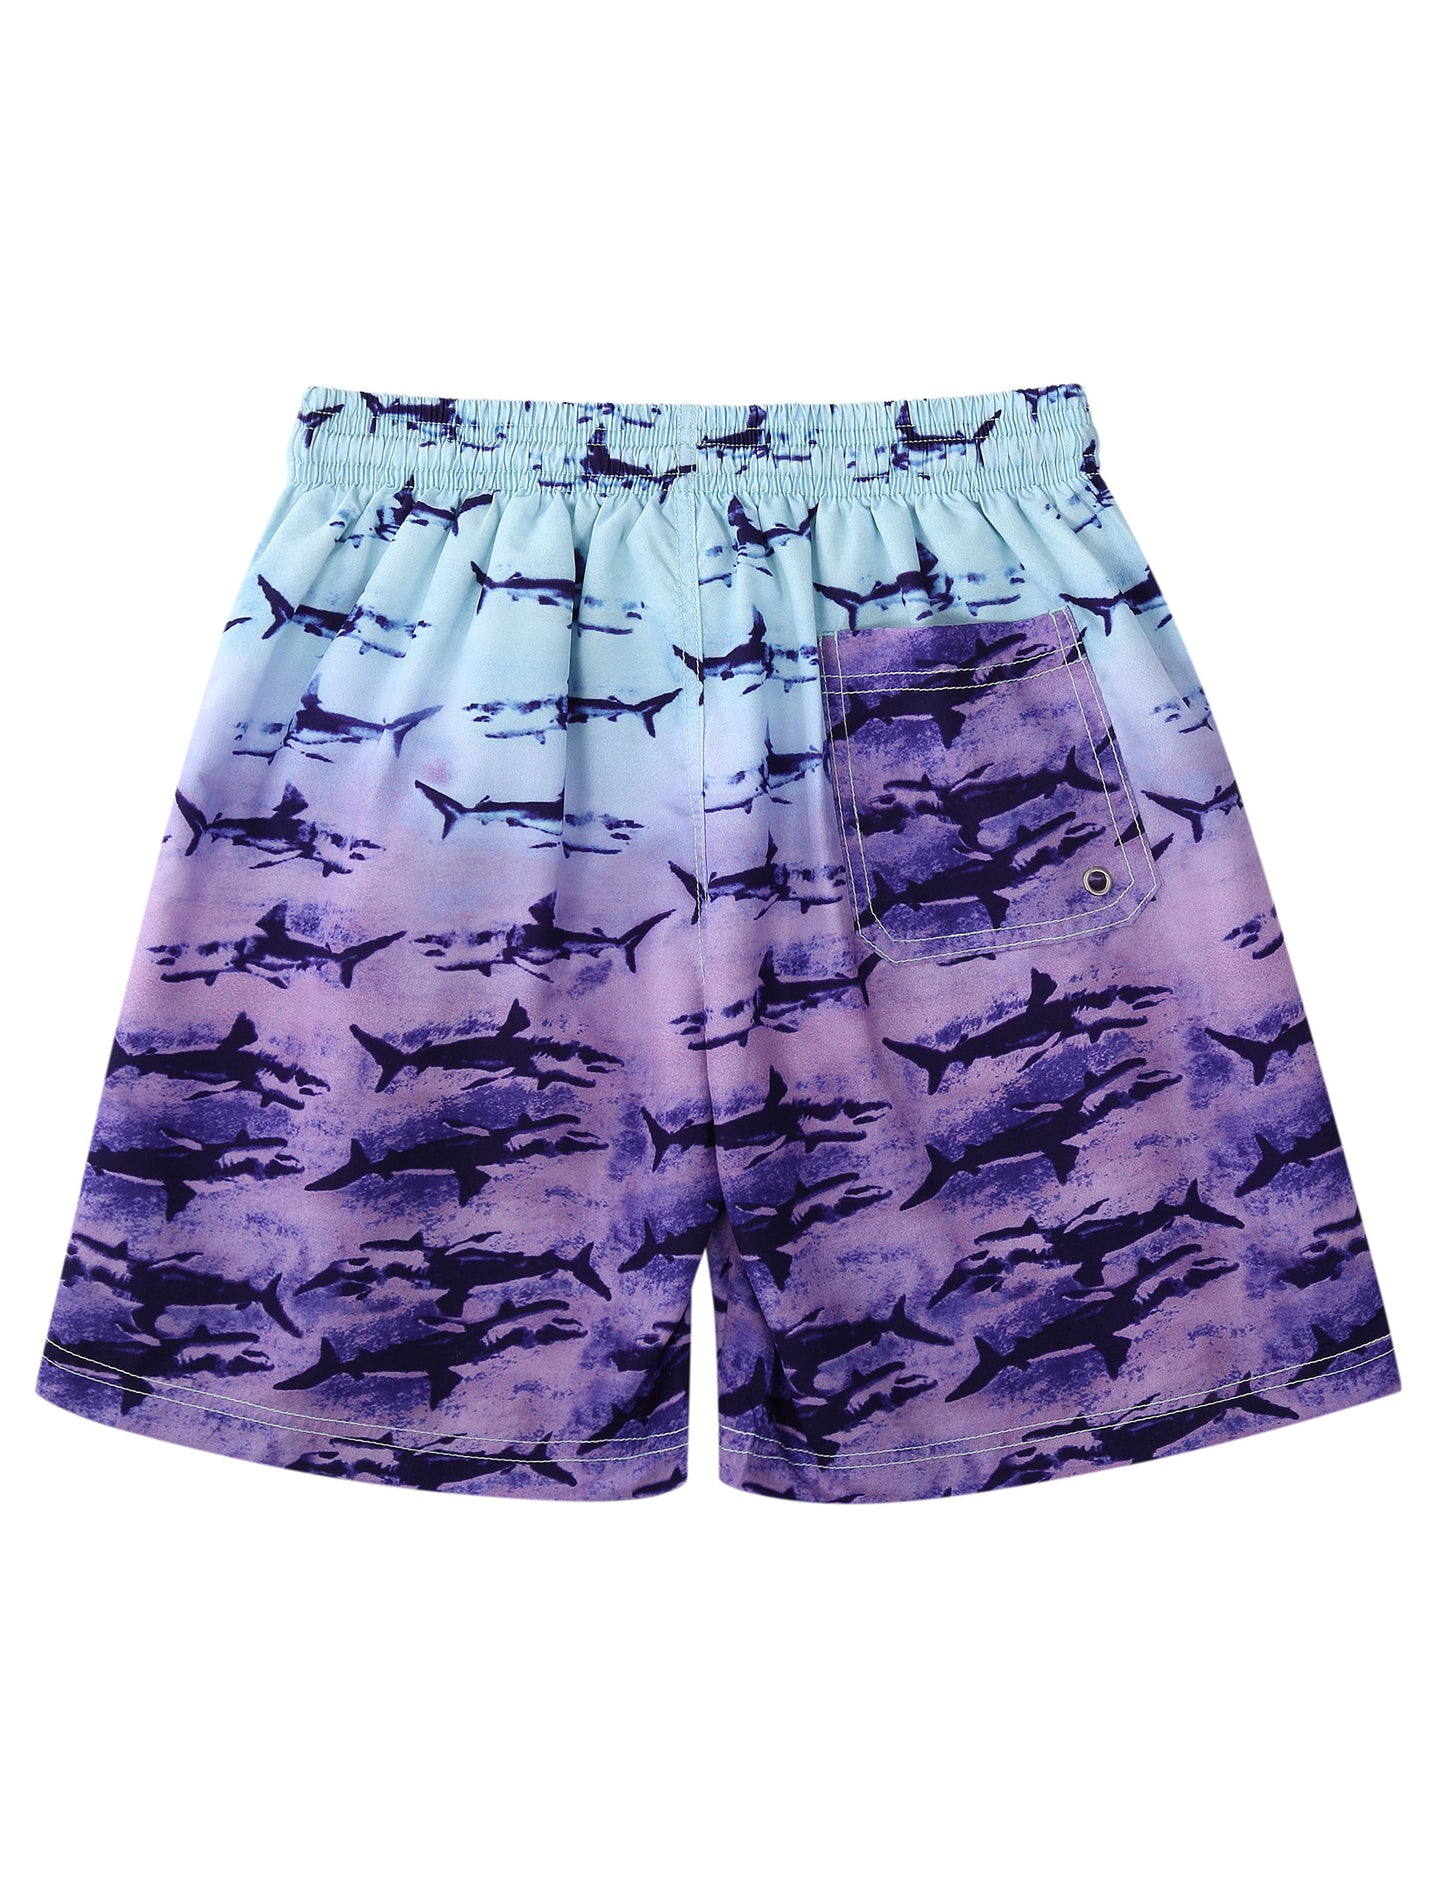 Boys Swim Trunks Quick Dry Swimwear Mesh Bathing Suit UPF 50+ Swimsuits with Mesh Lining 6-8 Years Shark